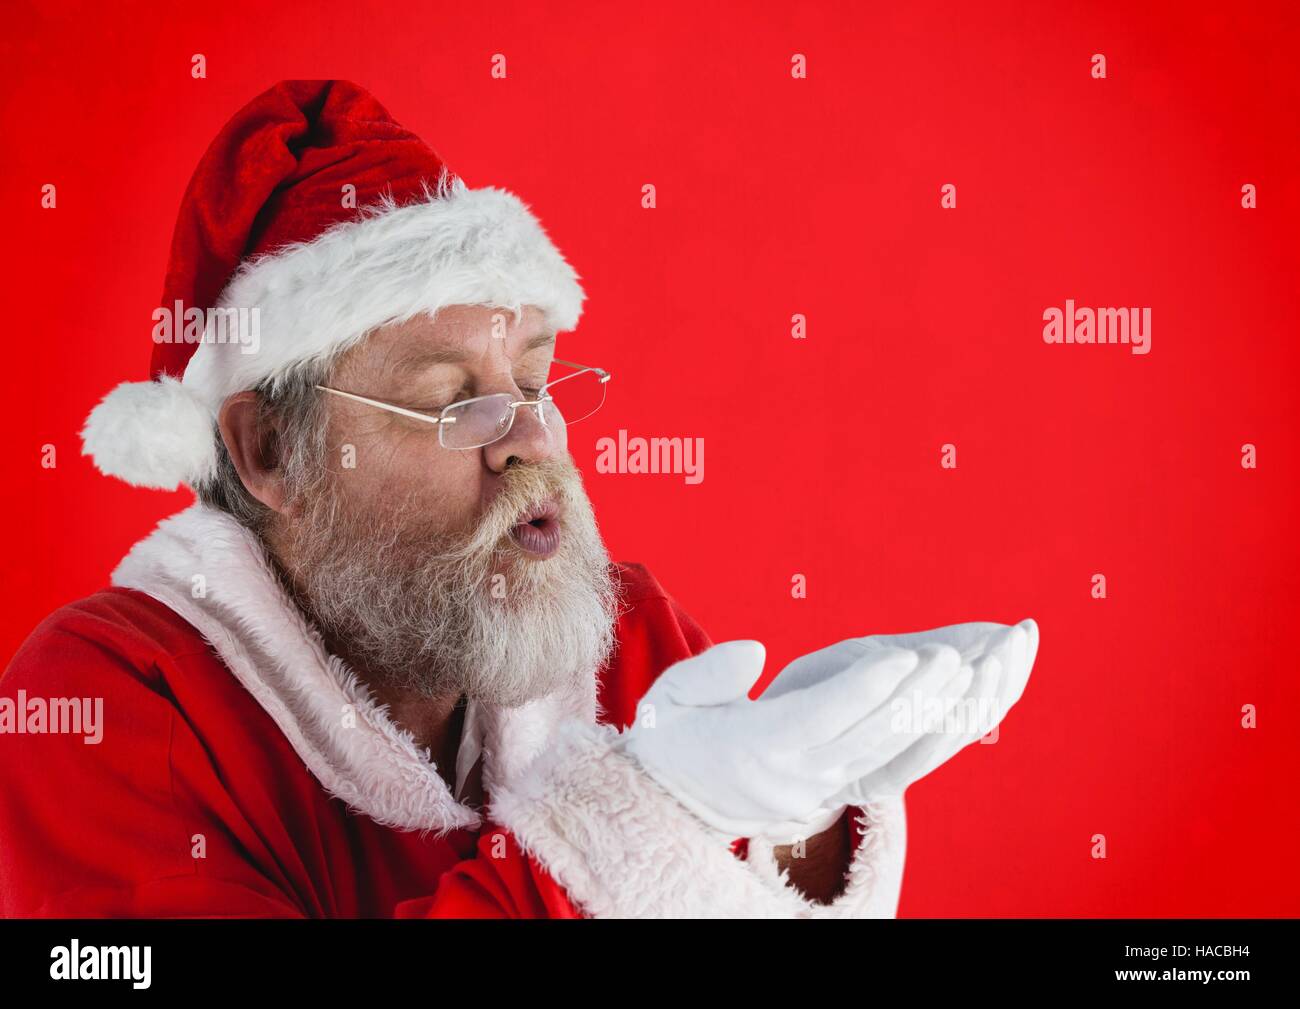 Santa claus pretending to blow imaginary snow Stock Photo